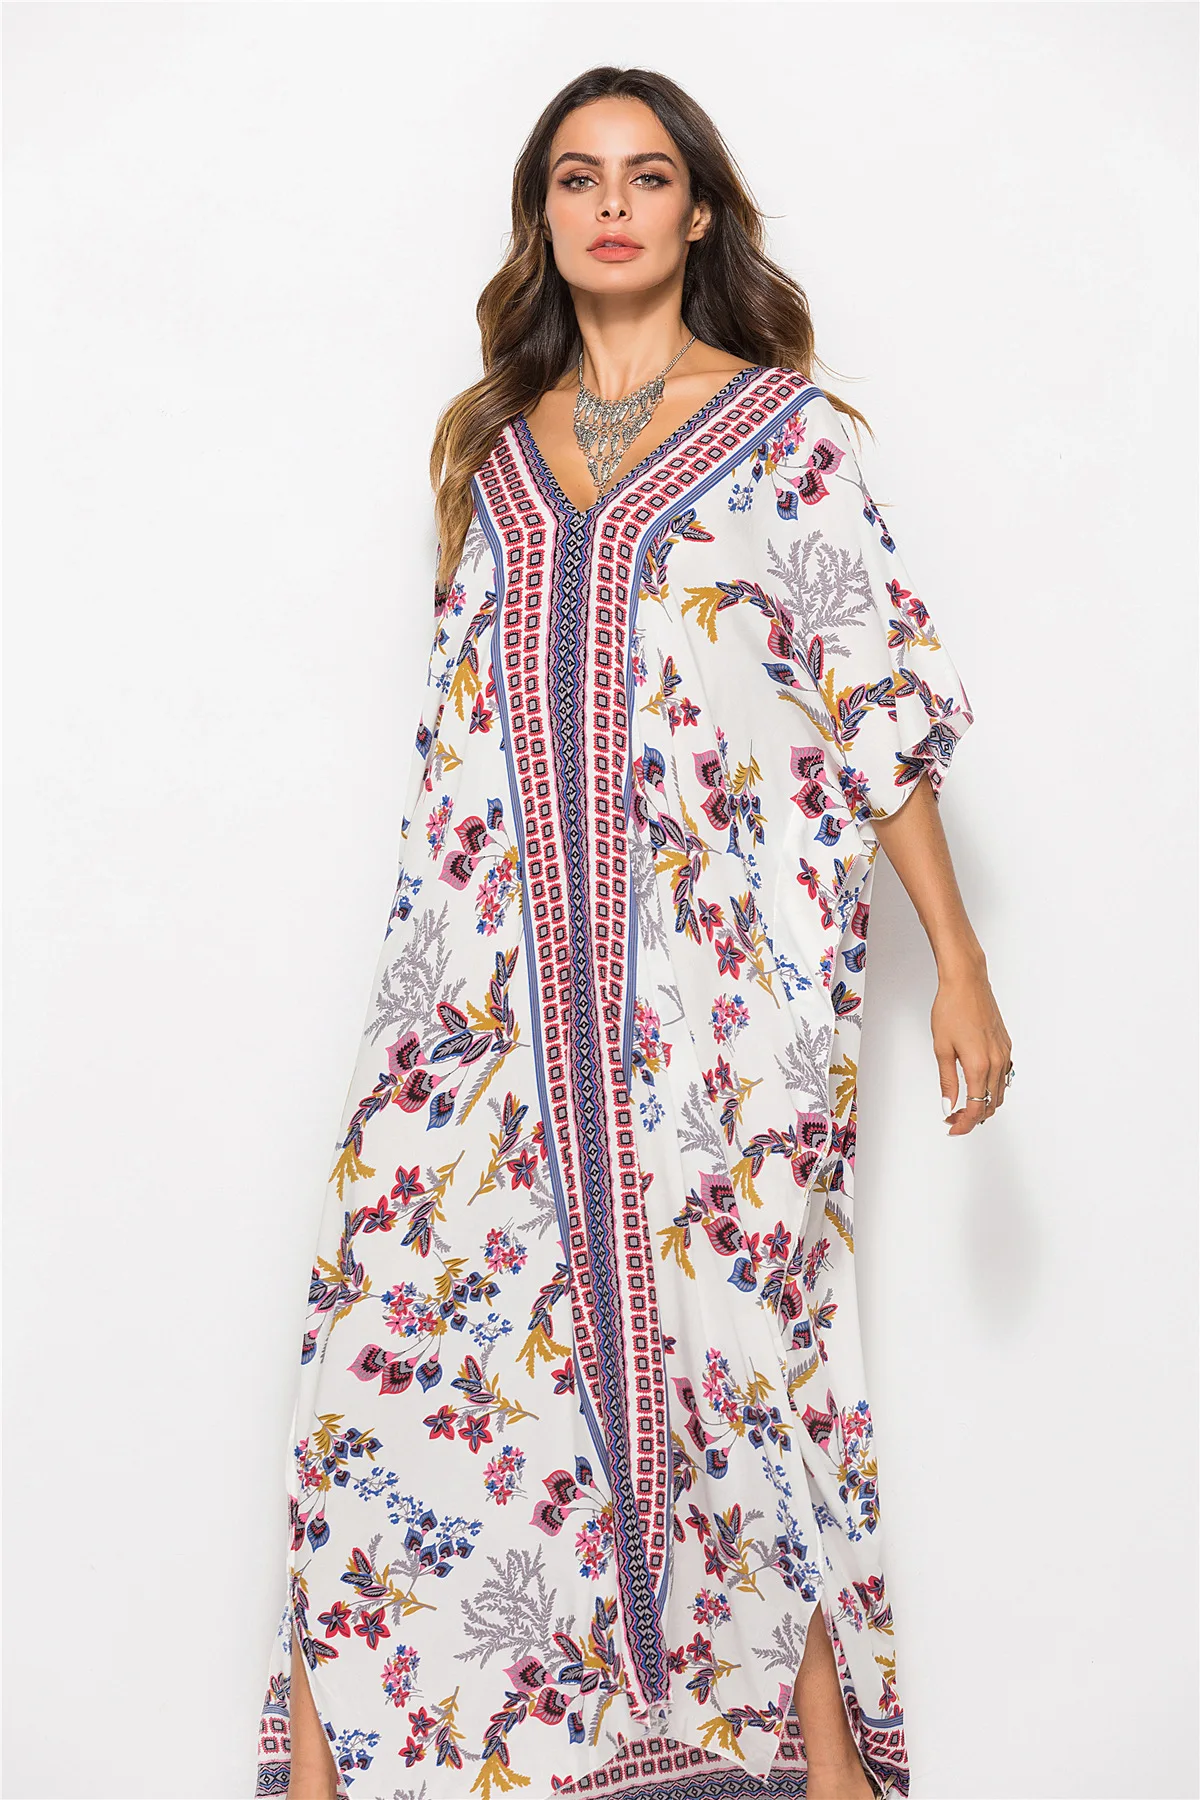 New Printed Bohemian Women Maxi Dress Batwing Sleeve Holiday Beach Wear Fashion Muslim Abaya Dubai Arabic Moroccan Robe VKDR1767